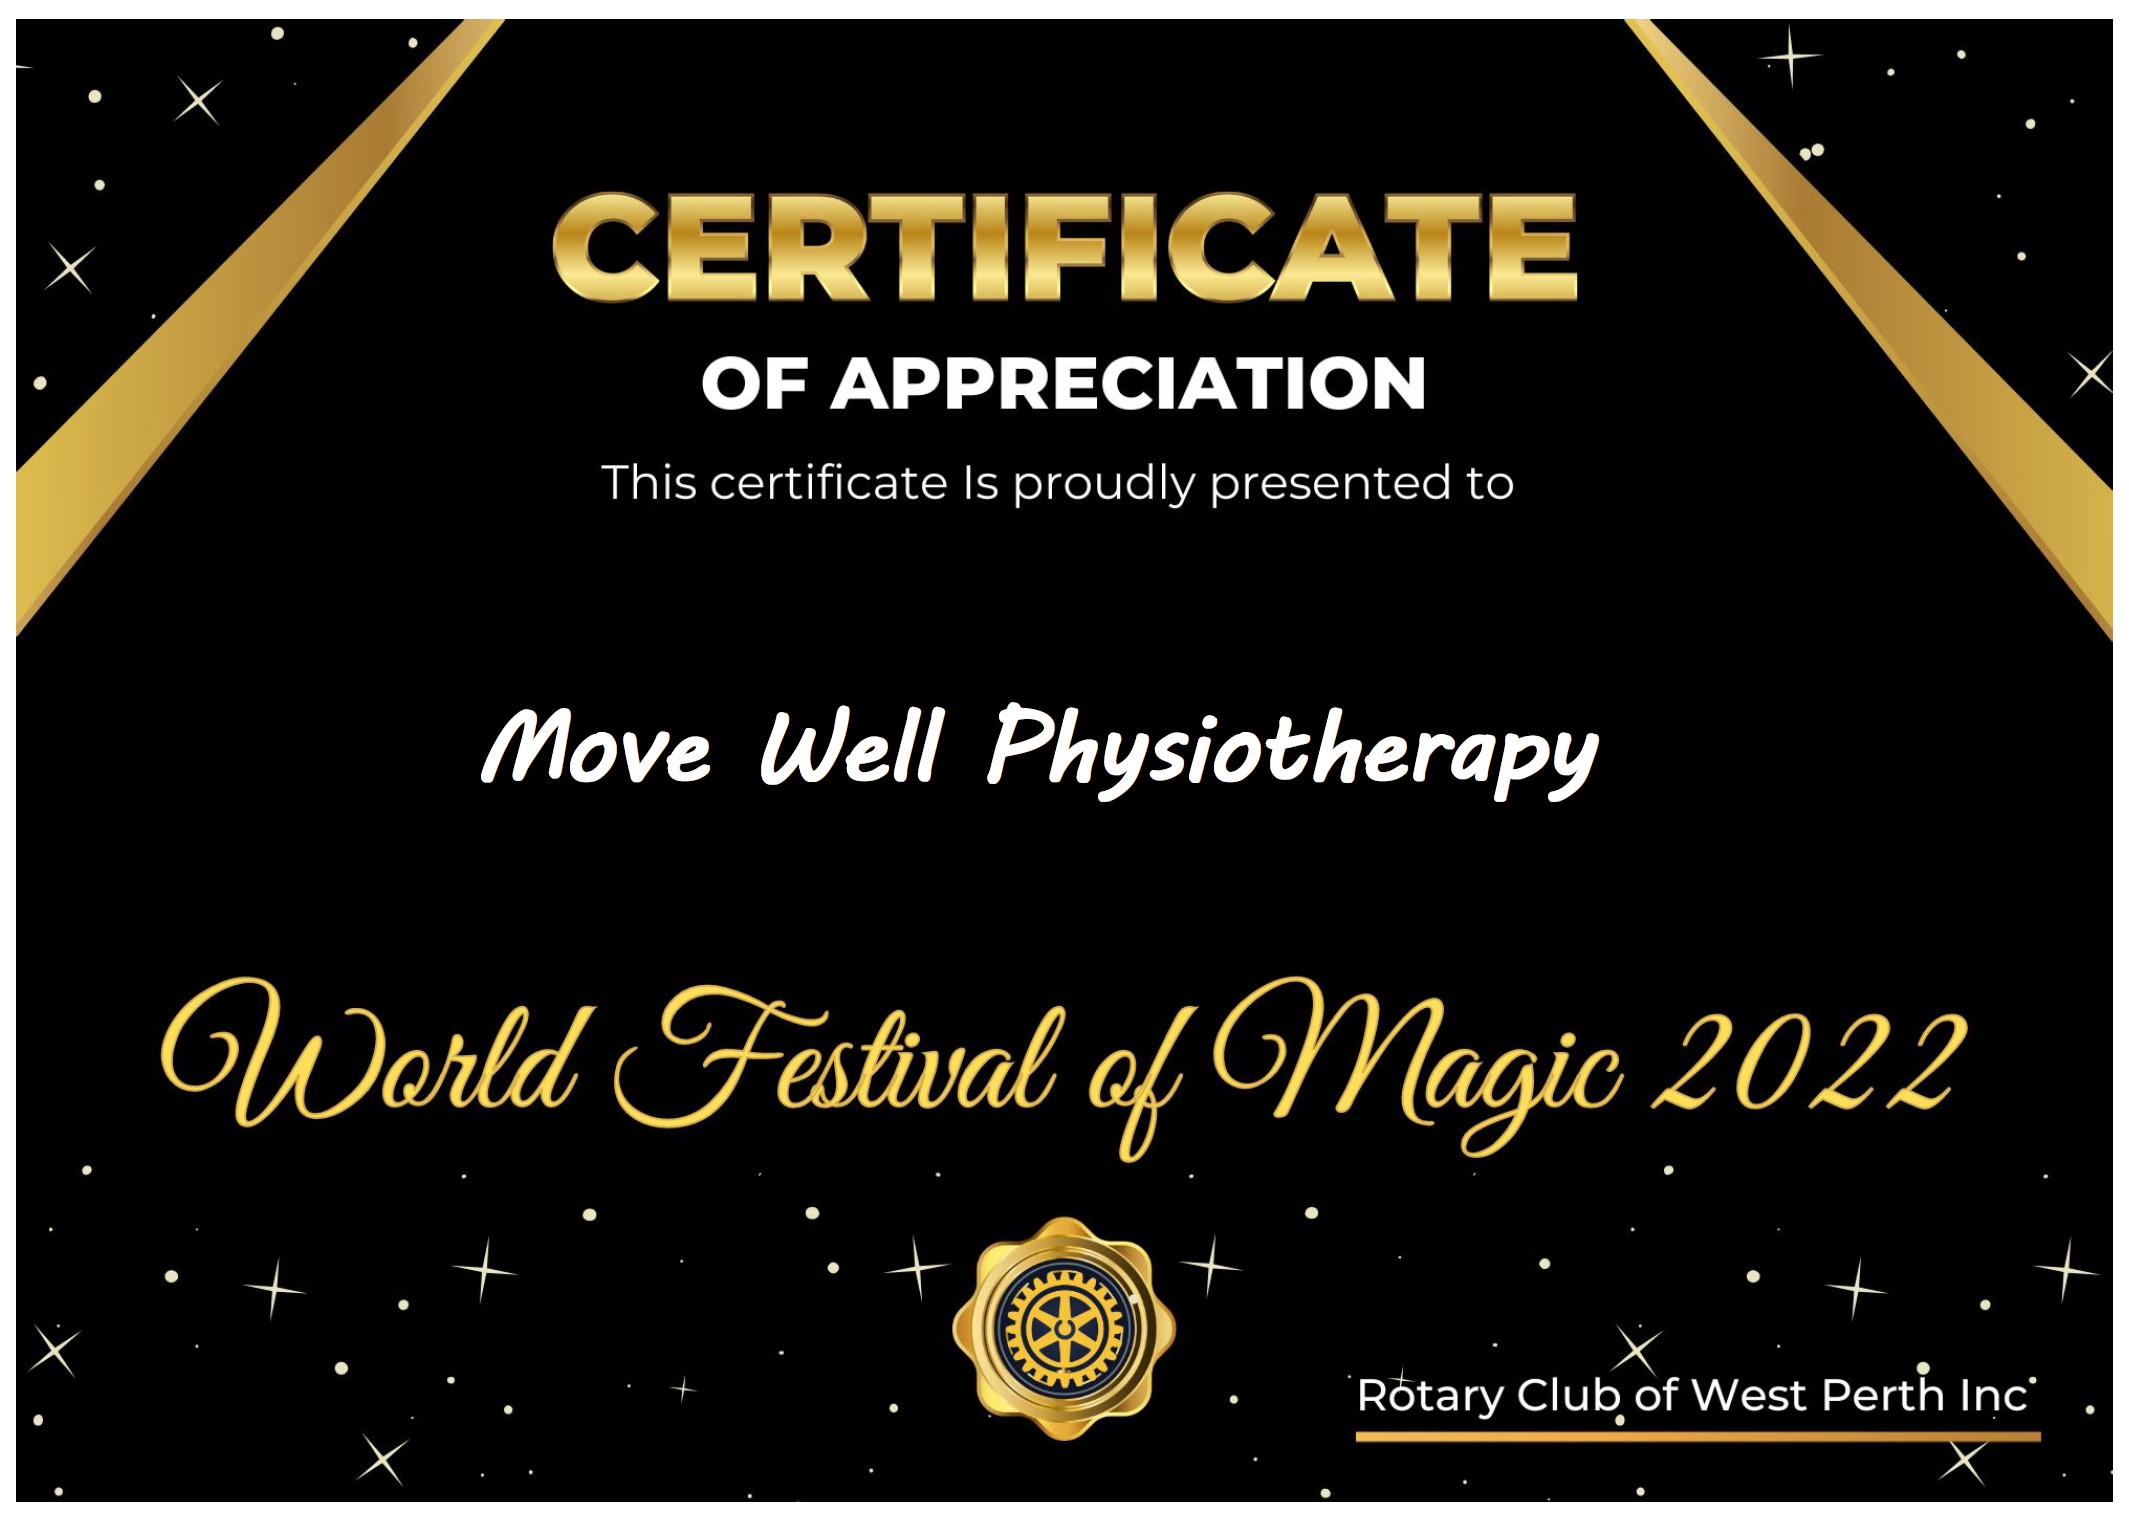 Perth World Festival of Magic - Rotary Club of West Perth